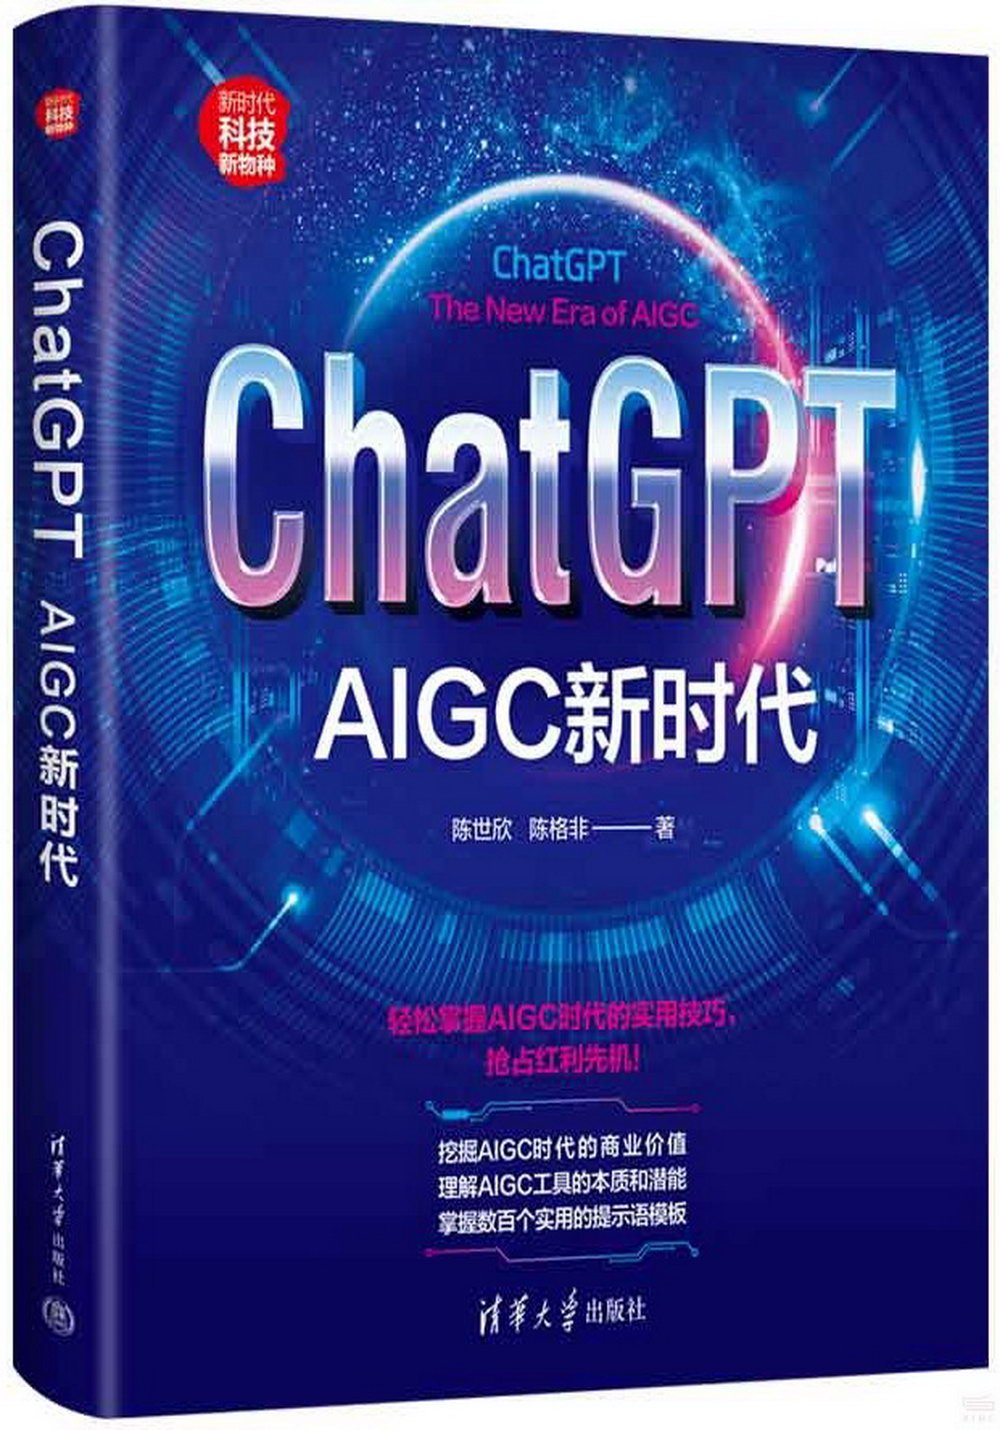 ChatGPT：AIGC新時代